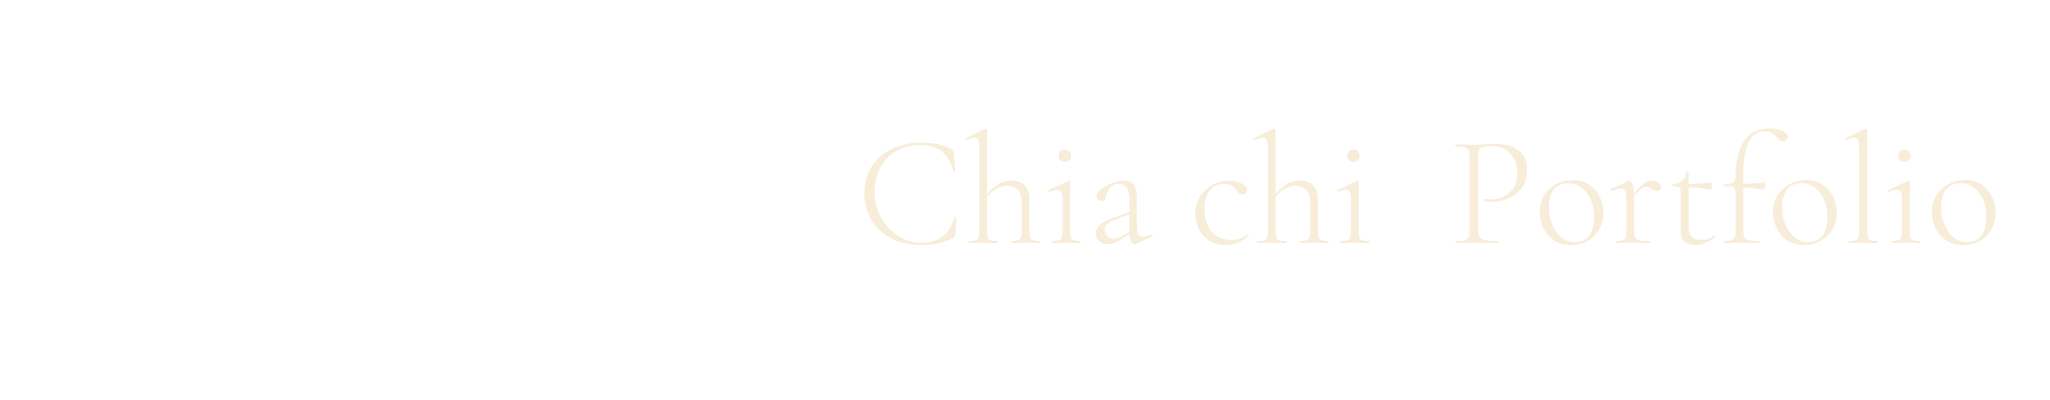 Chia chi 美容美學店